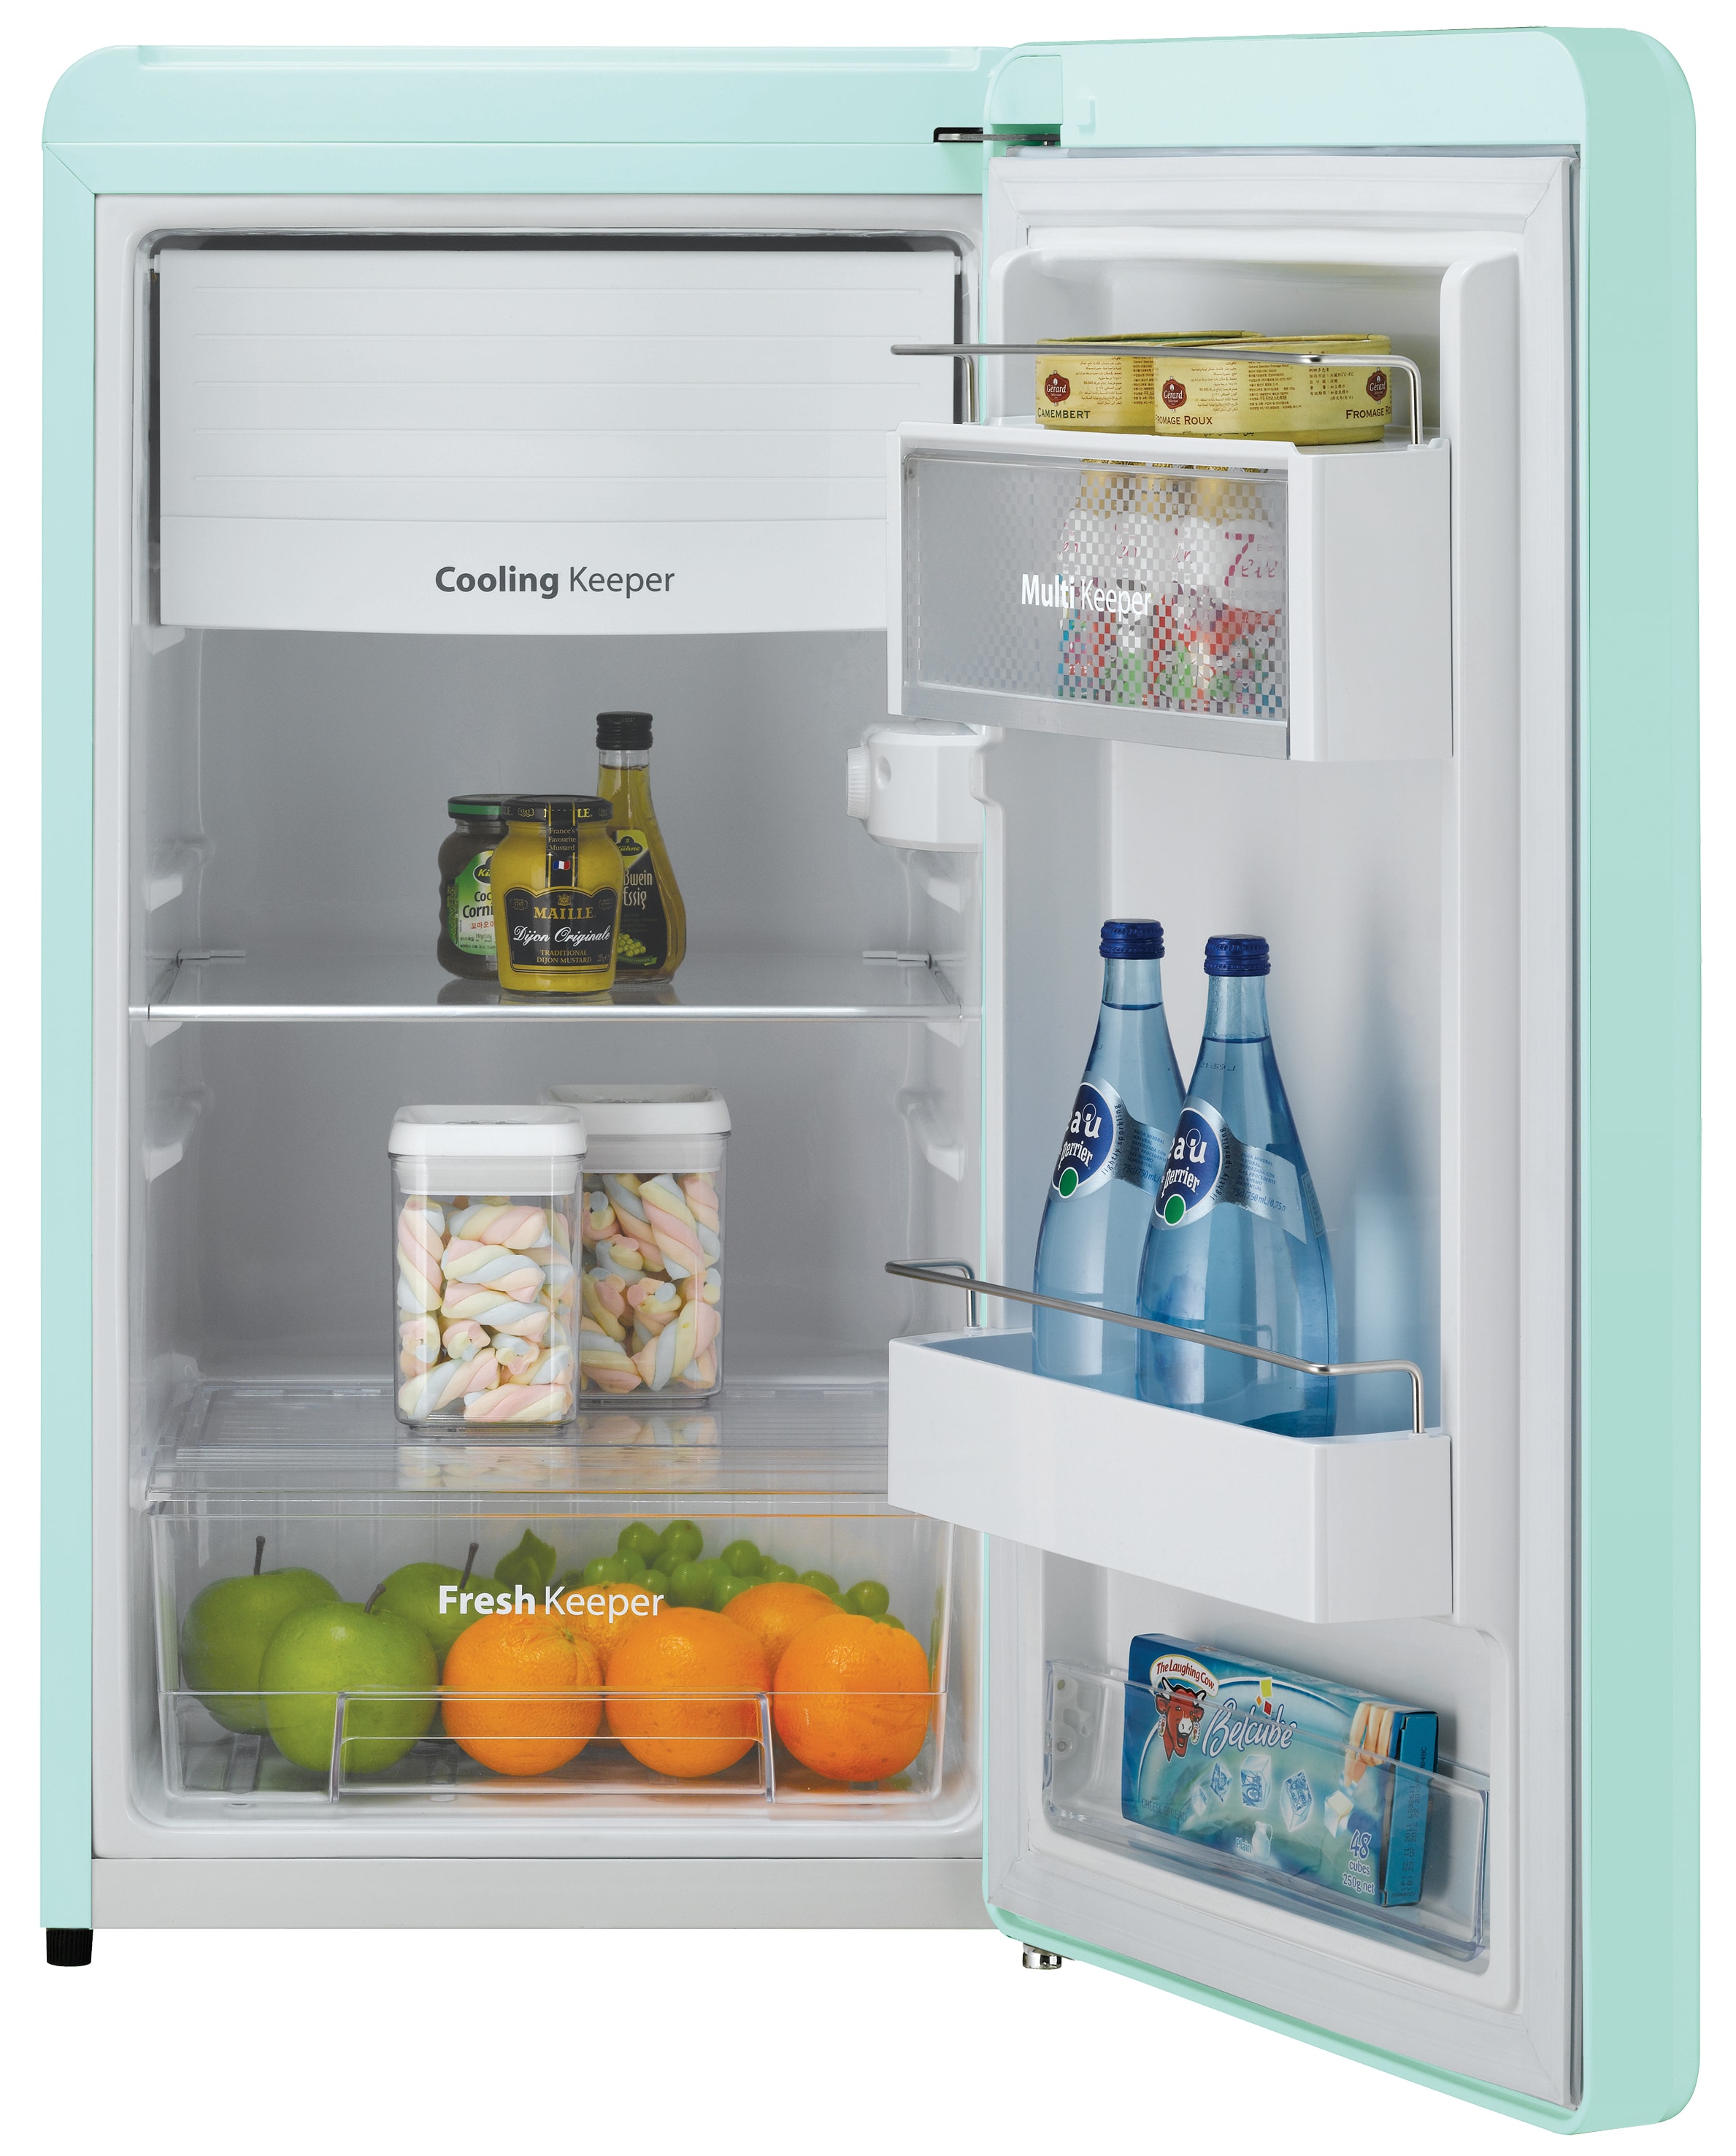 Купить холодильник дэу. Daewoo Electronics FN-153 cm. Холодильник Daewoo Электроникс. Однокамерный холодильник Дэу. Daewoo Electronics холодильник маленький.